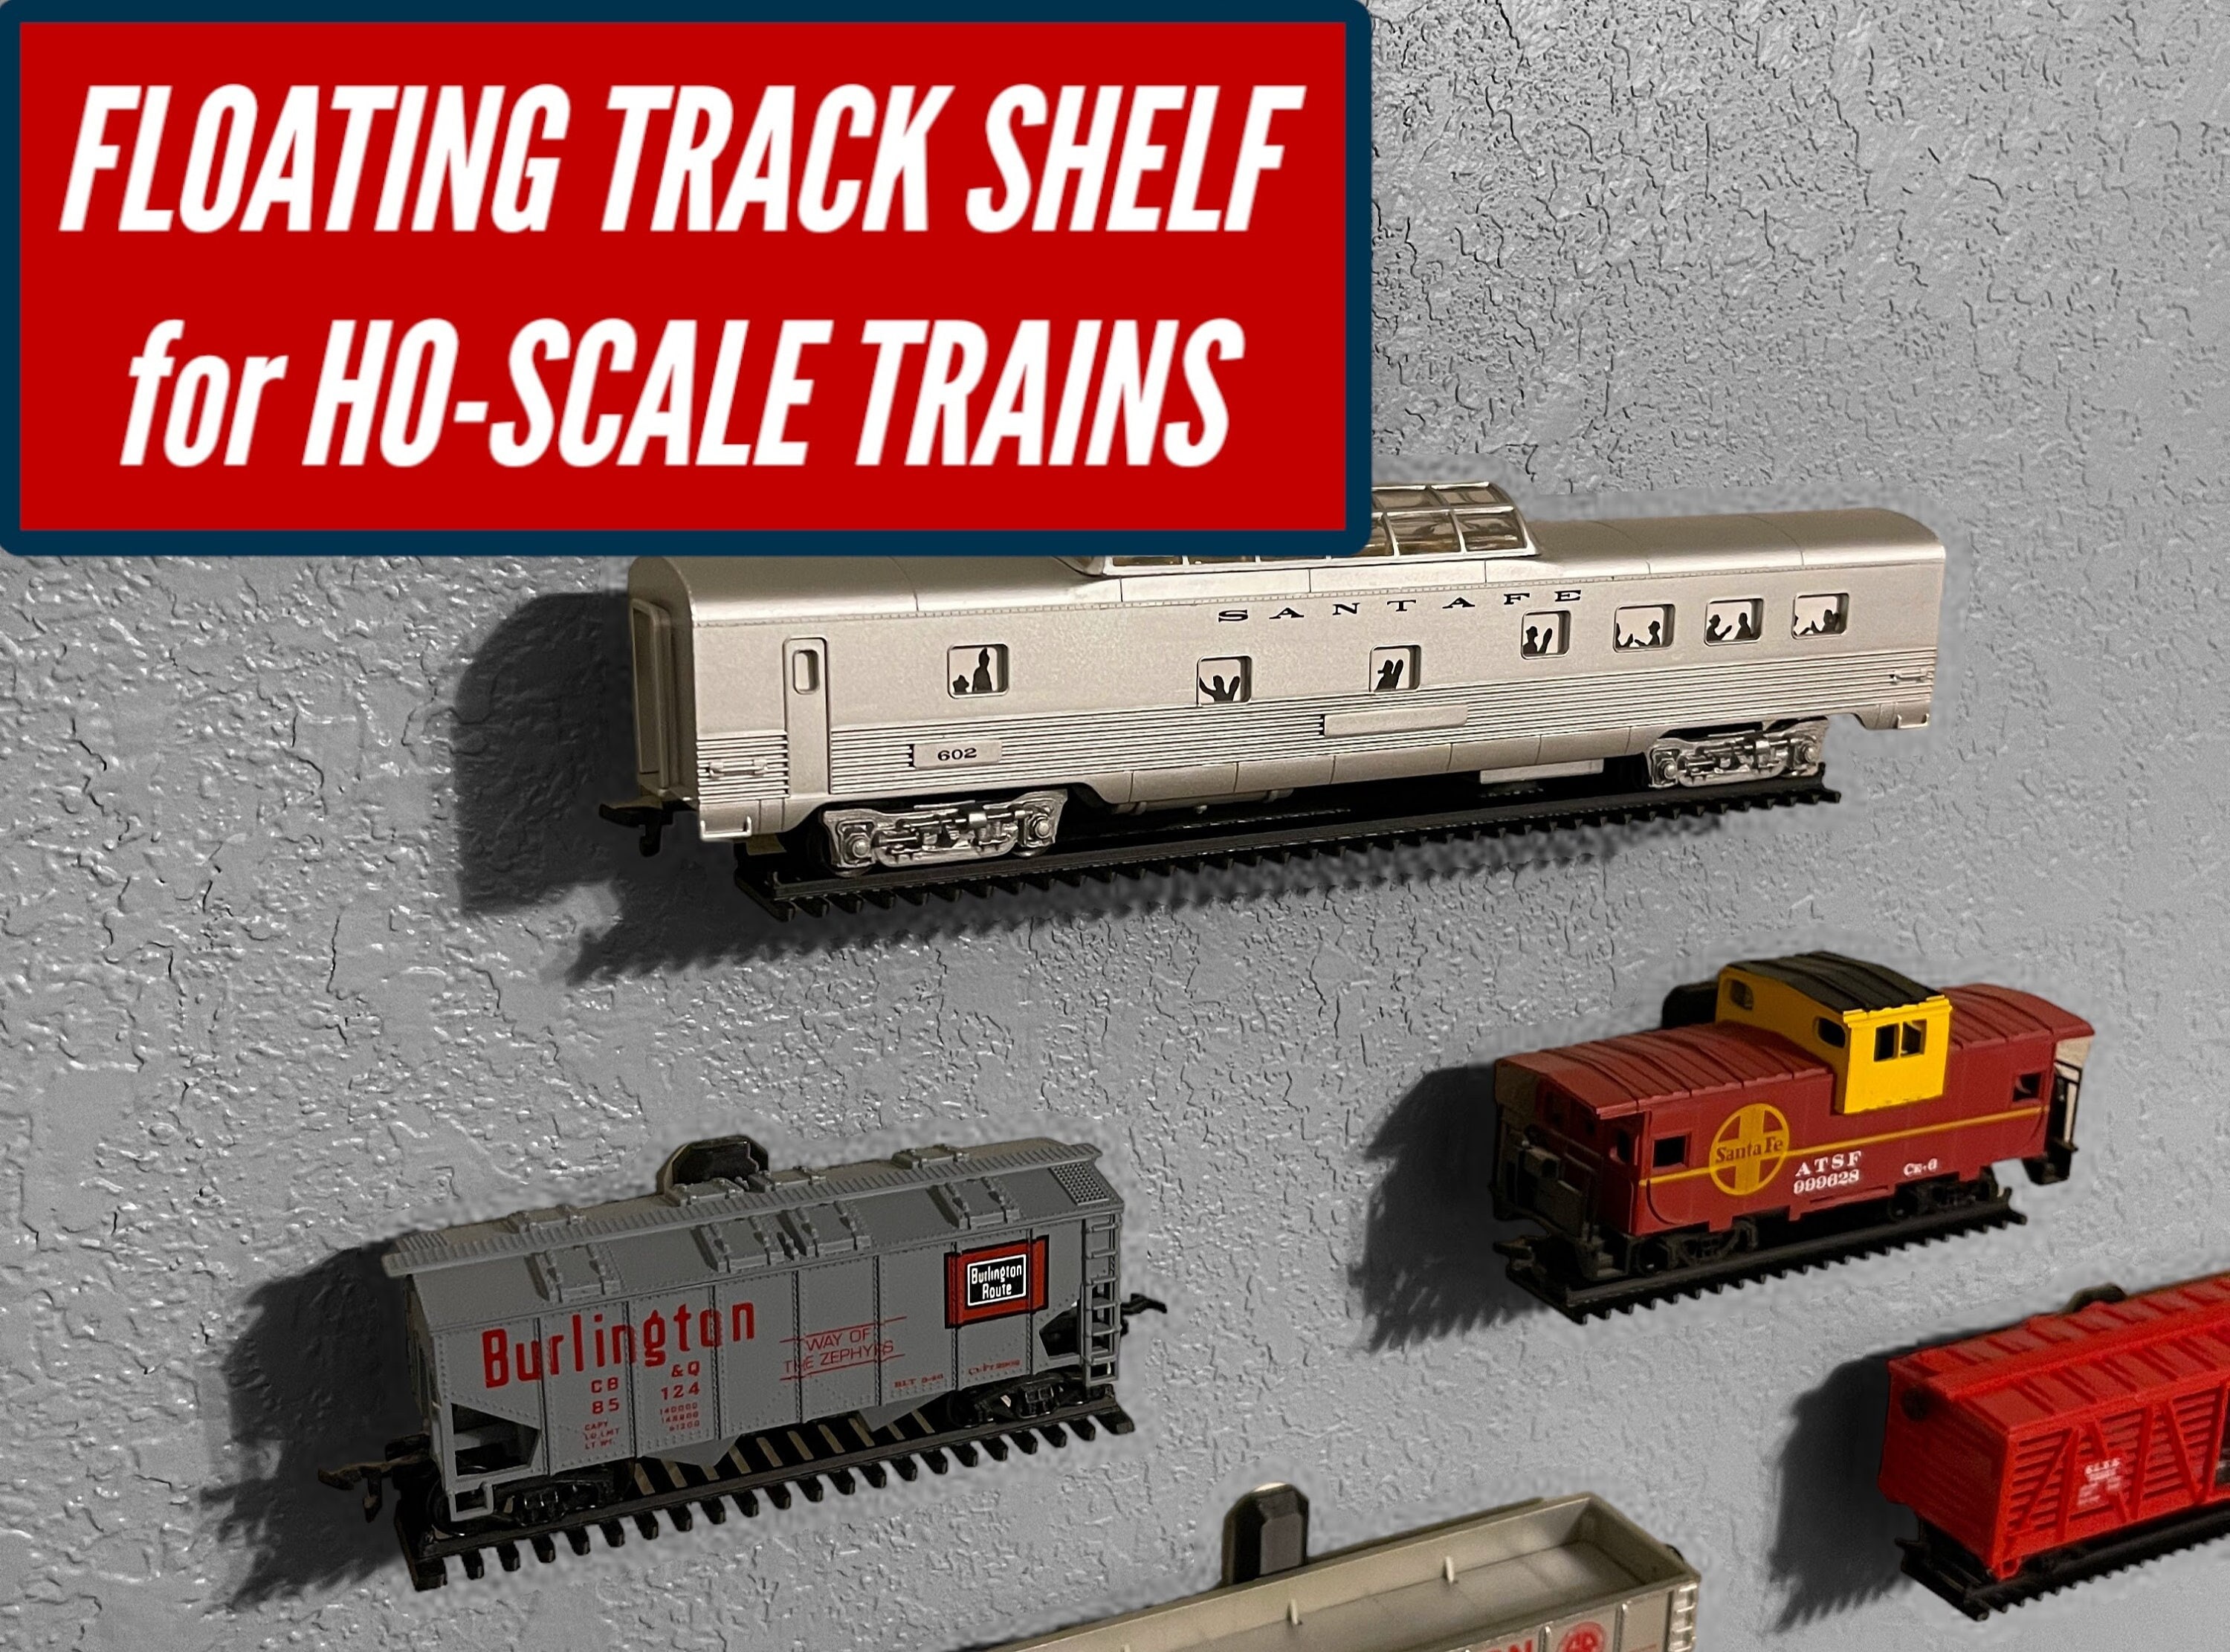 Grand-Central Locomotive Storage Box HO Scale Model Train Display Case #b1